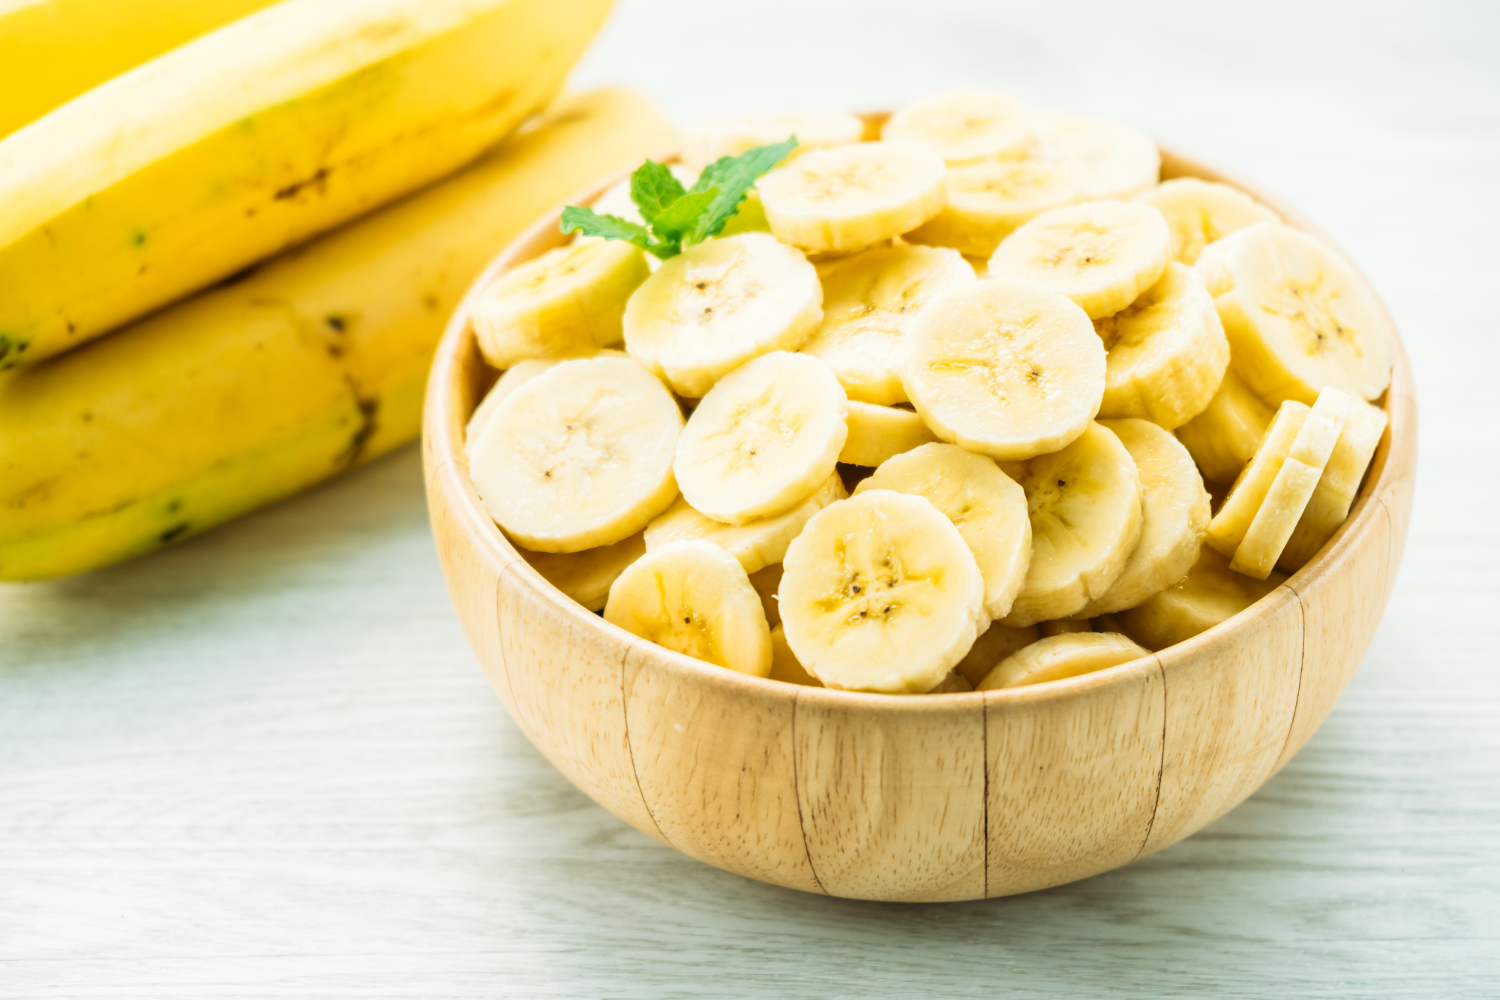 Aprenda novas formas de usar a banana e faça receitas deliciosas